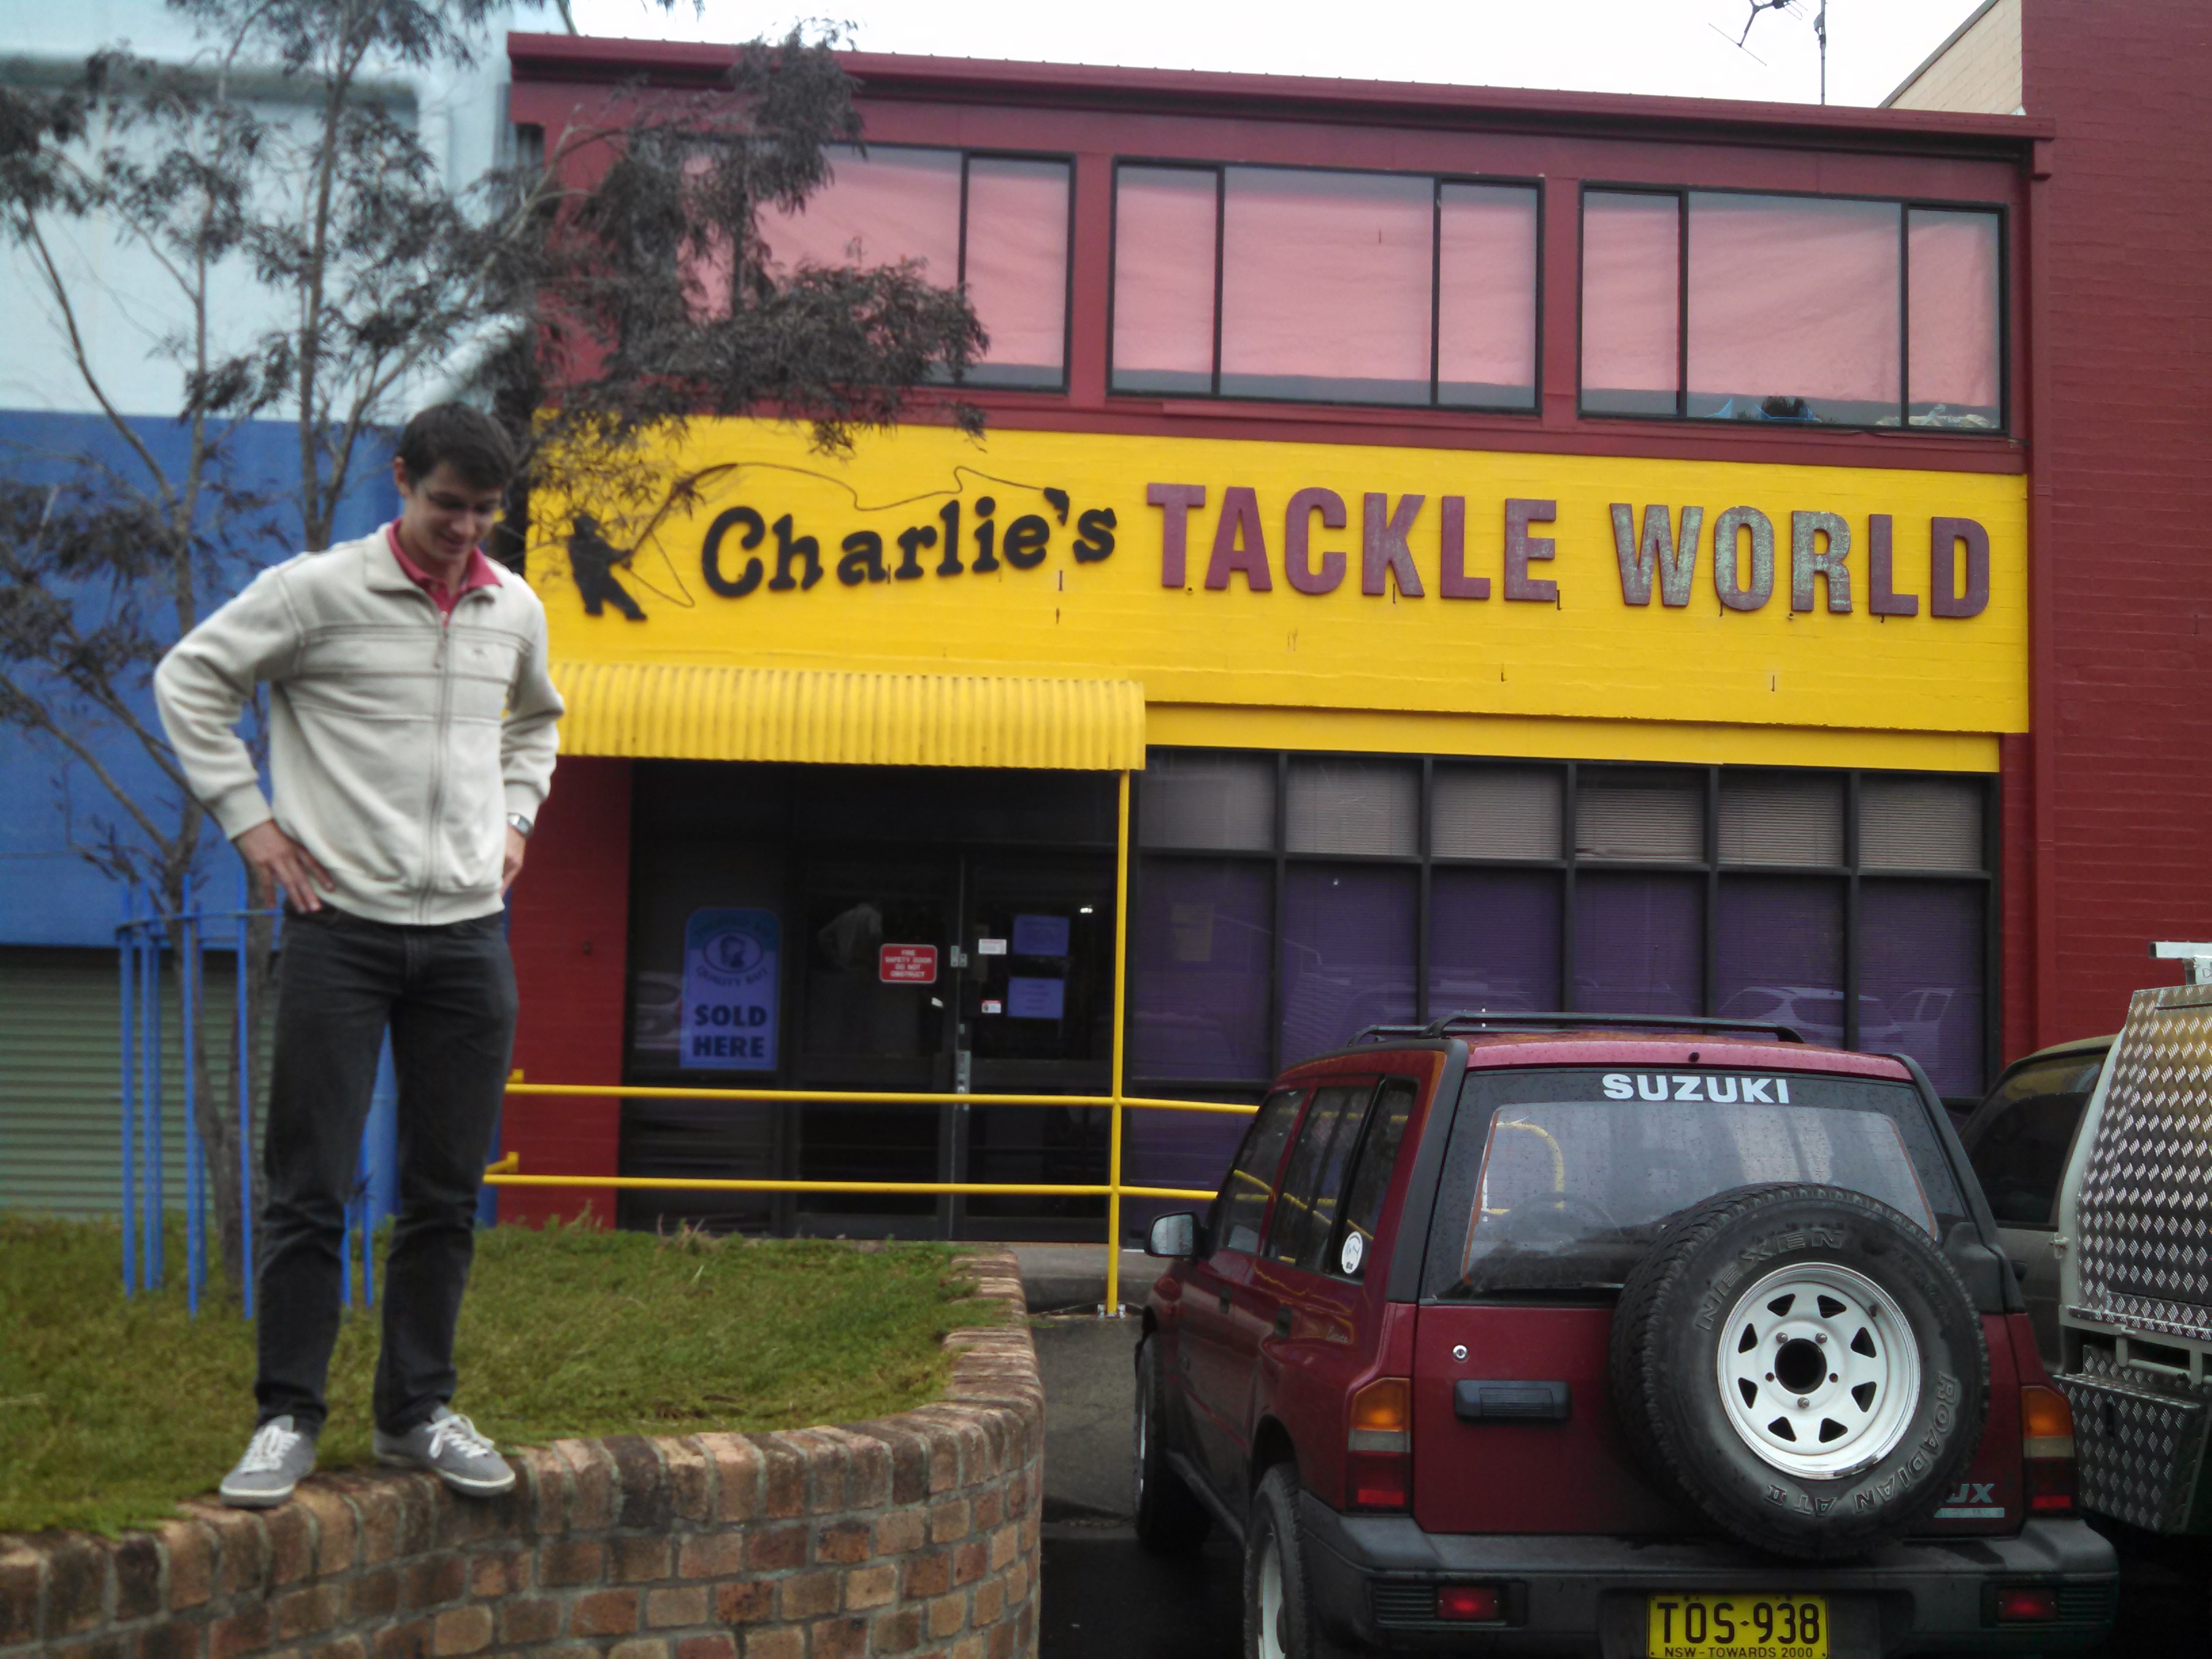 Charlie's Tackle World